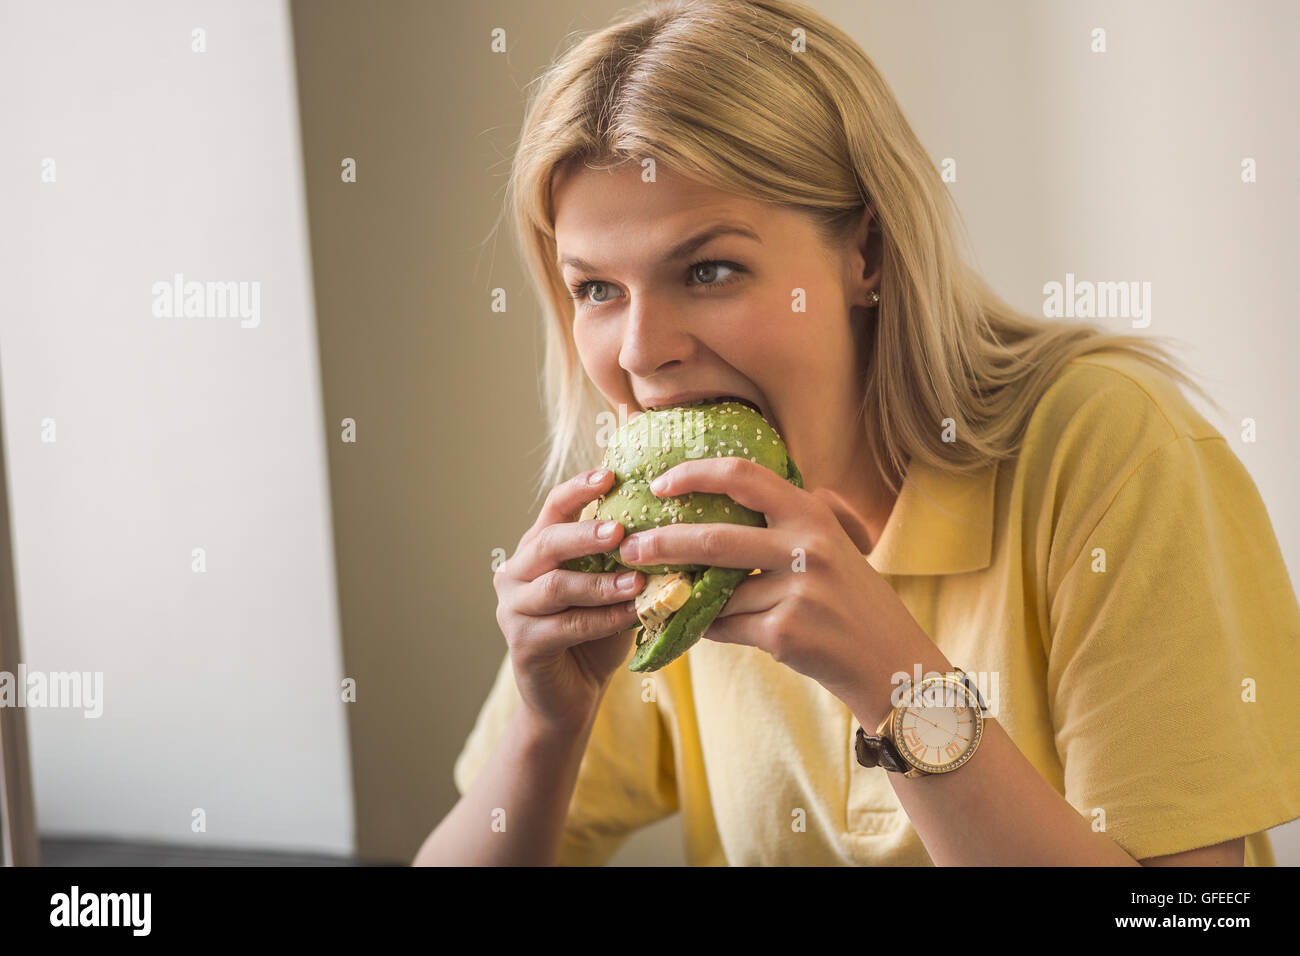 Woman eating vegan burger in restaurant Stock Photo